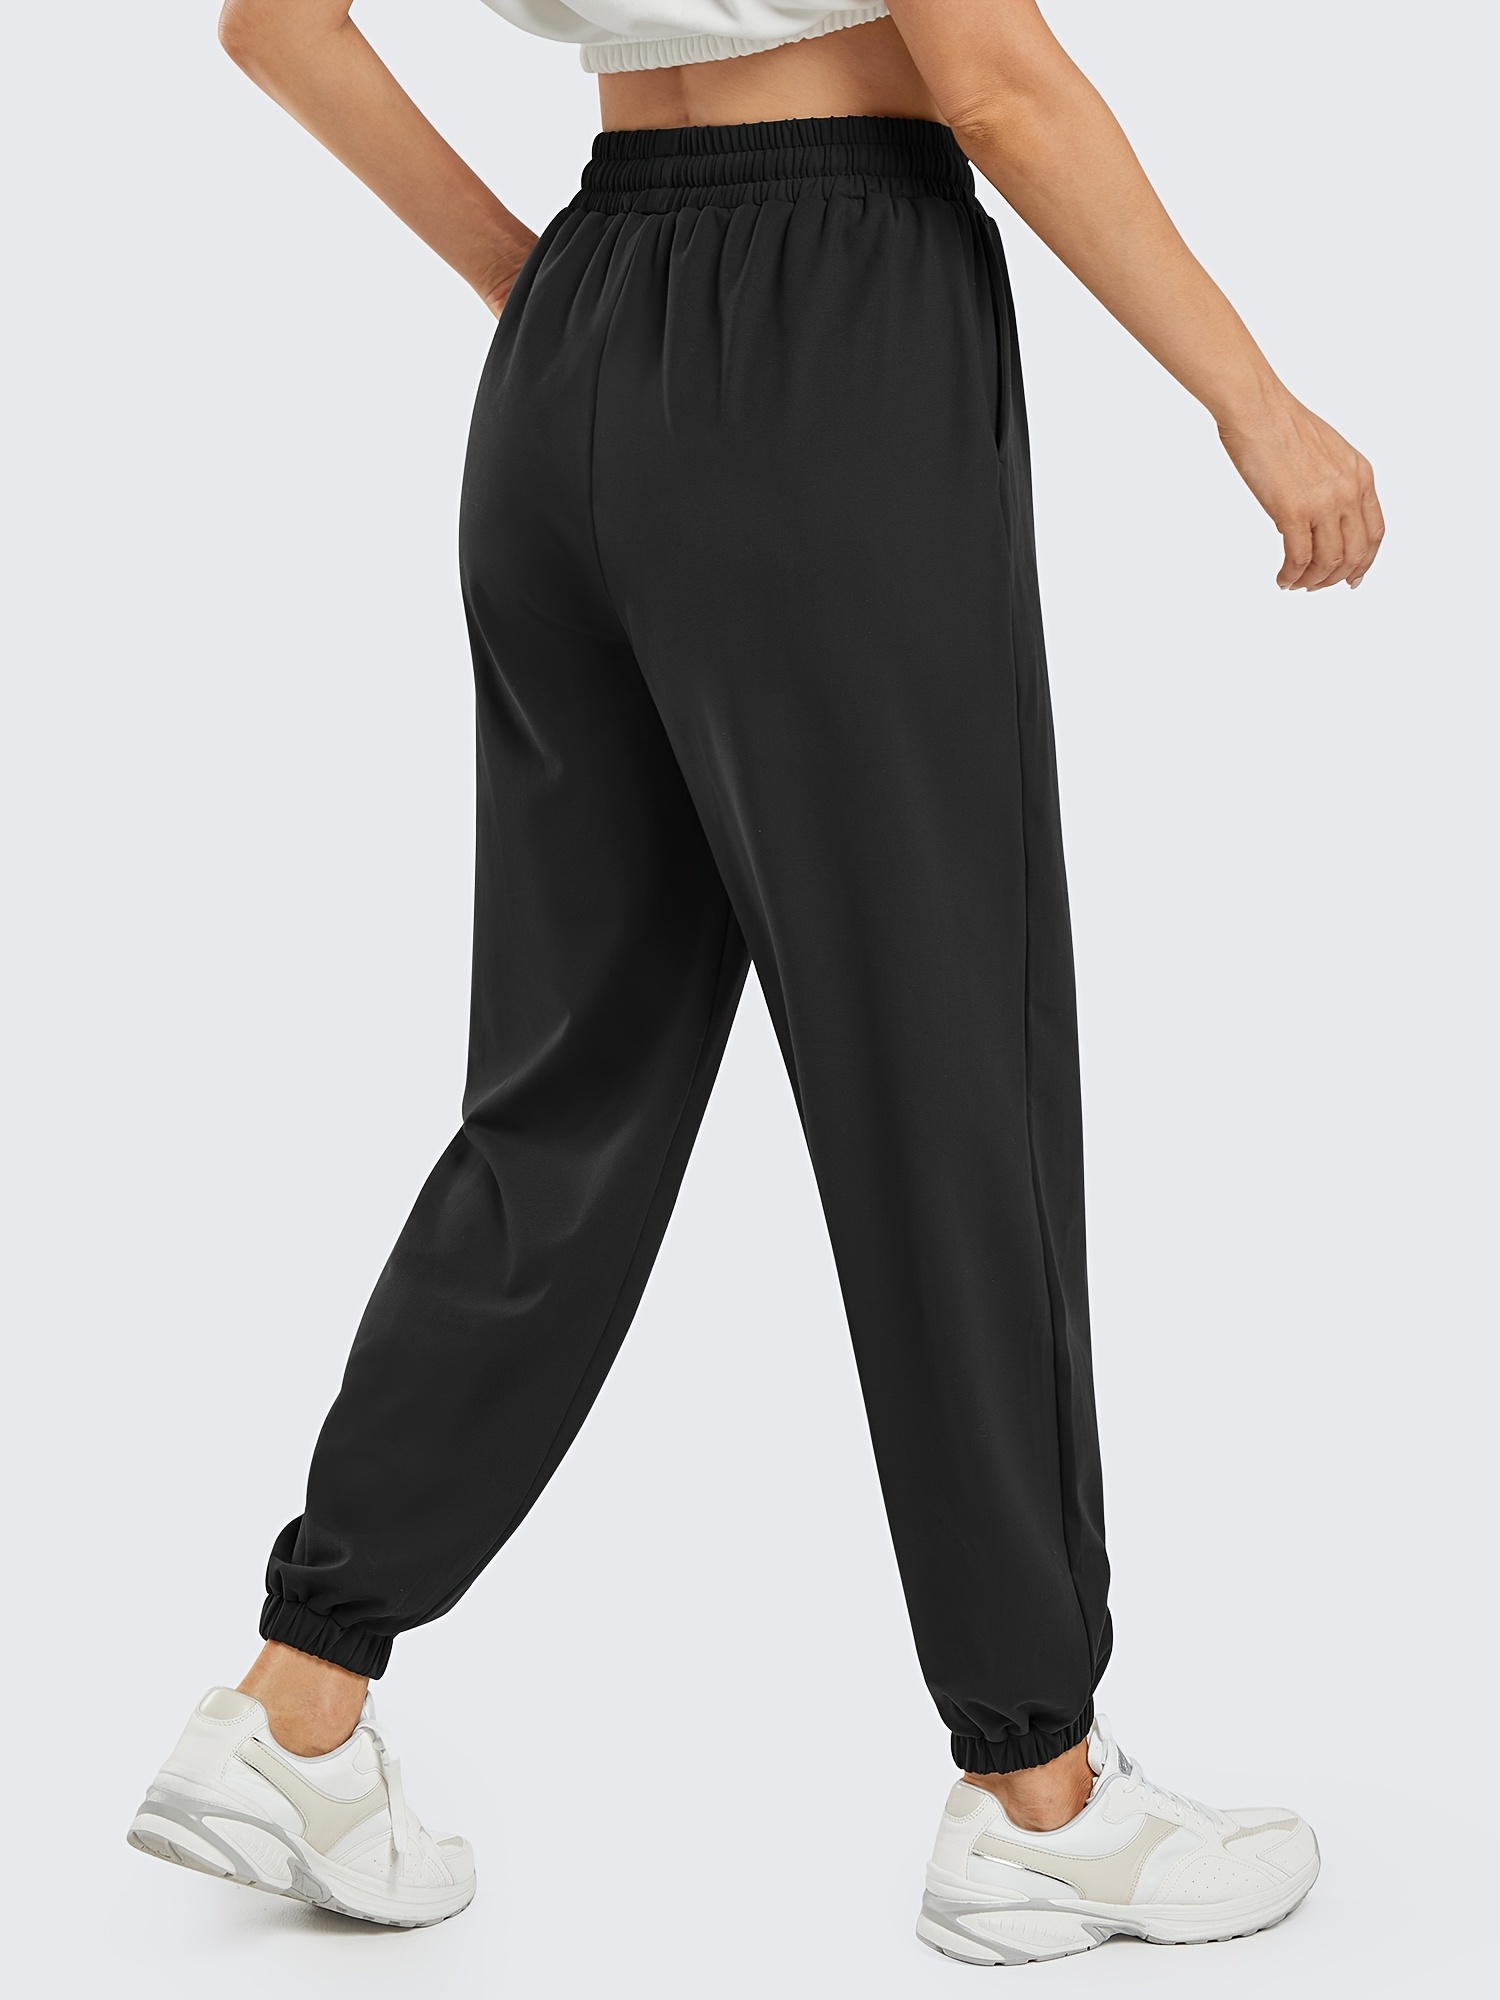 Women's Solid Sweatpants Drawstring Jogger Sweat Pants Cinch Bottom Casual  Elastic Waist Workout Trousers